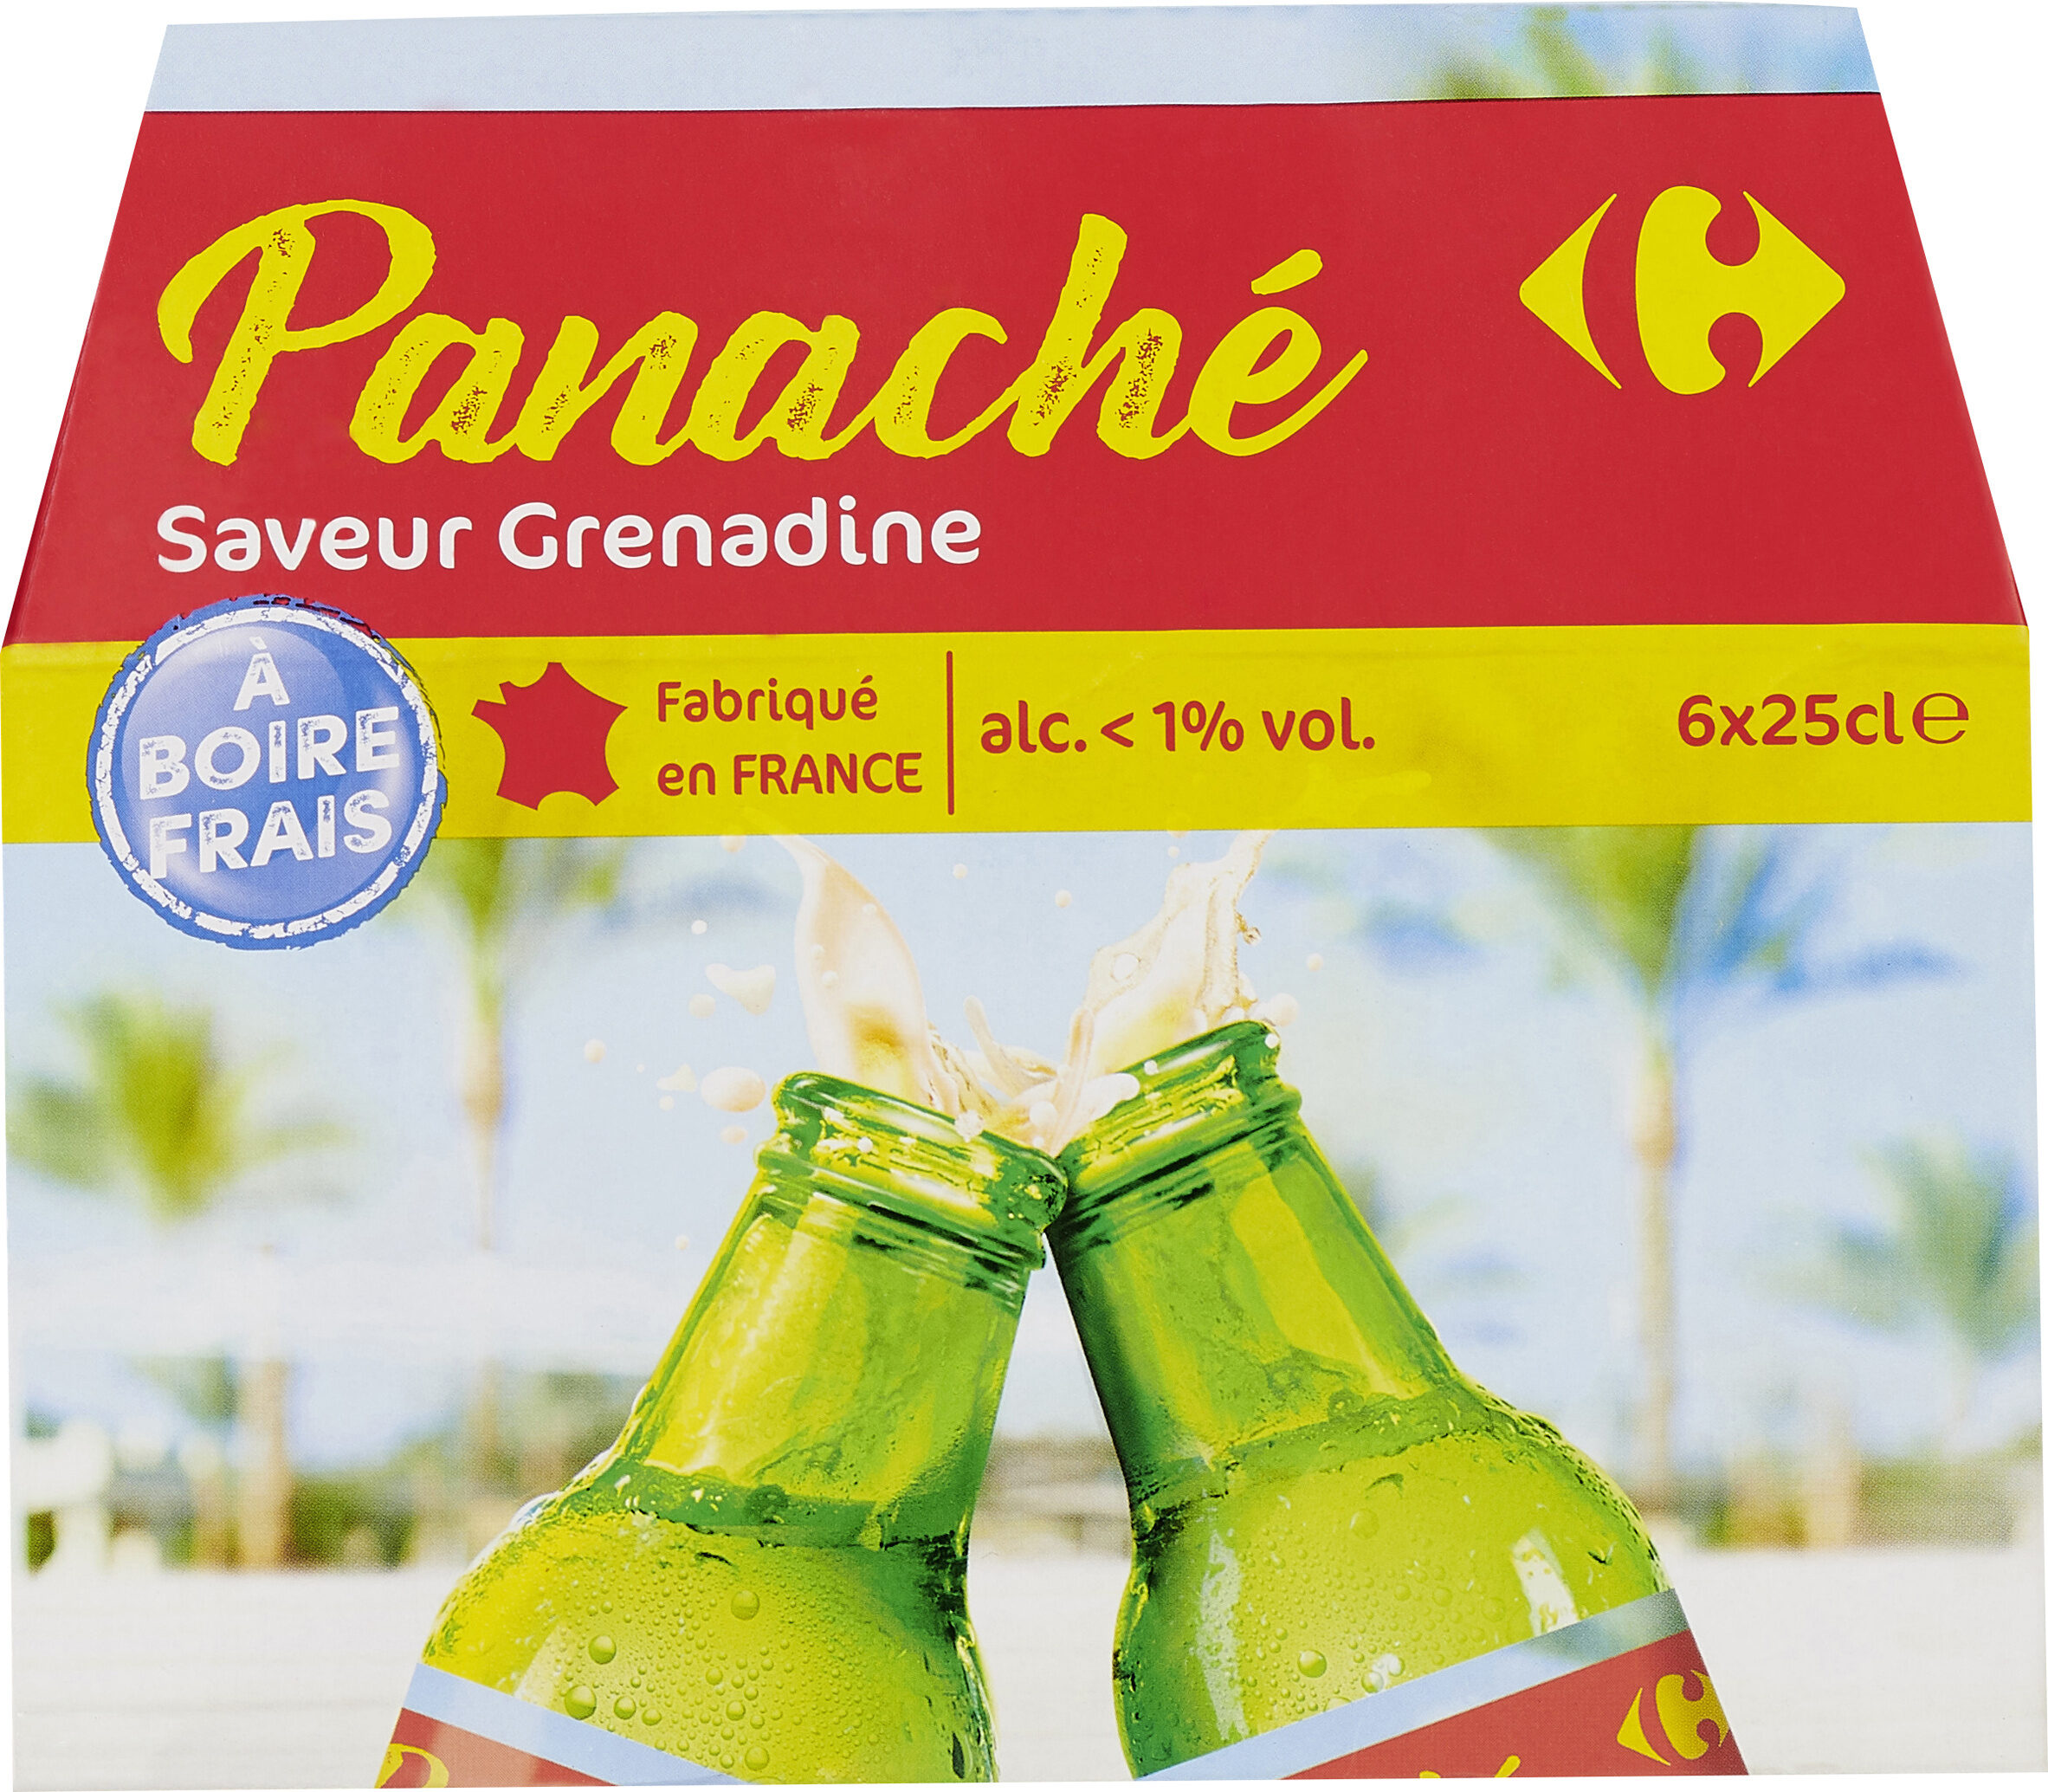 Panaché Saveur Grenadine - Produkt - fr